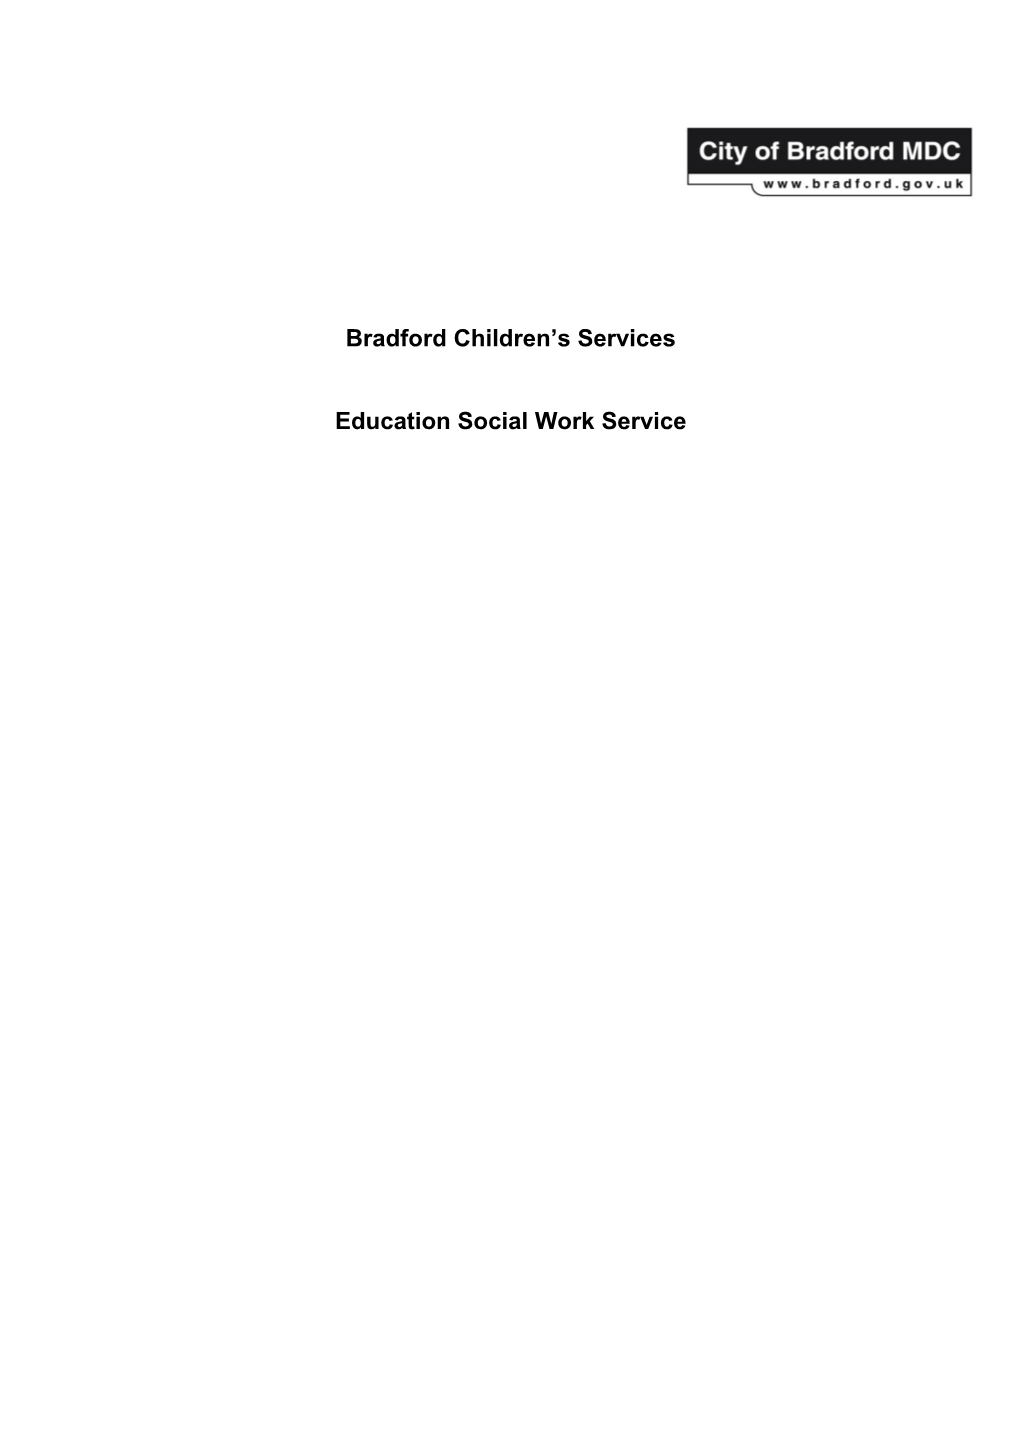 Education Social Work Service